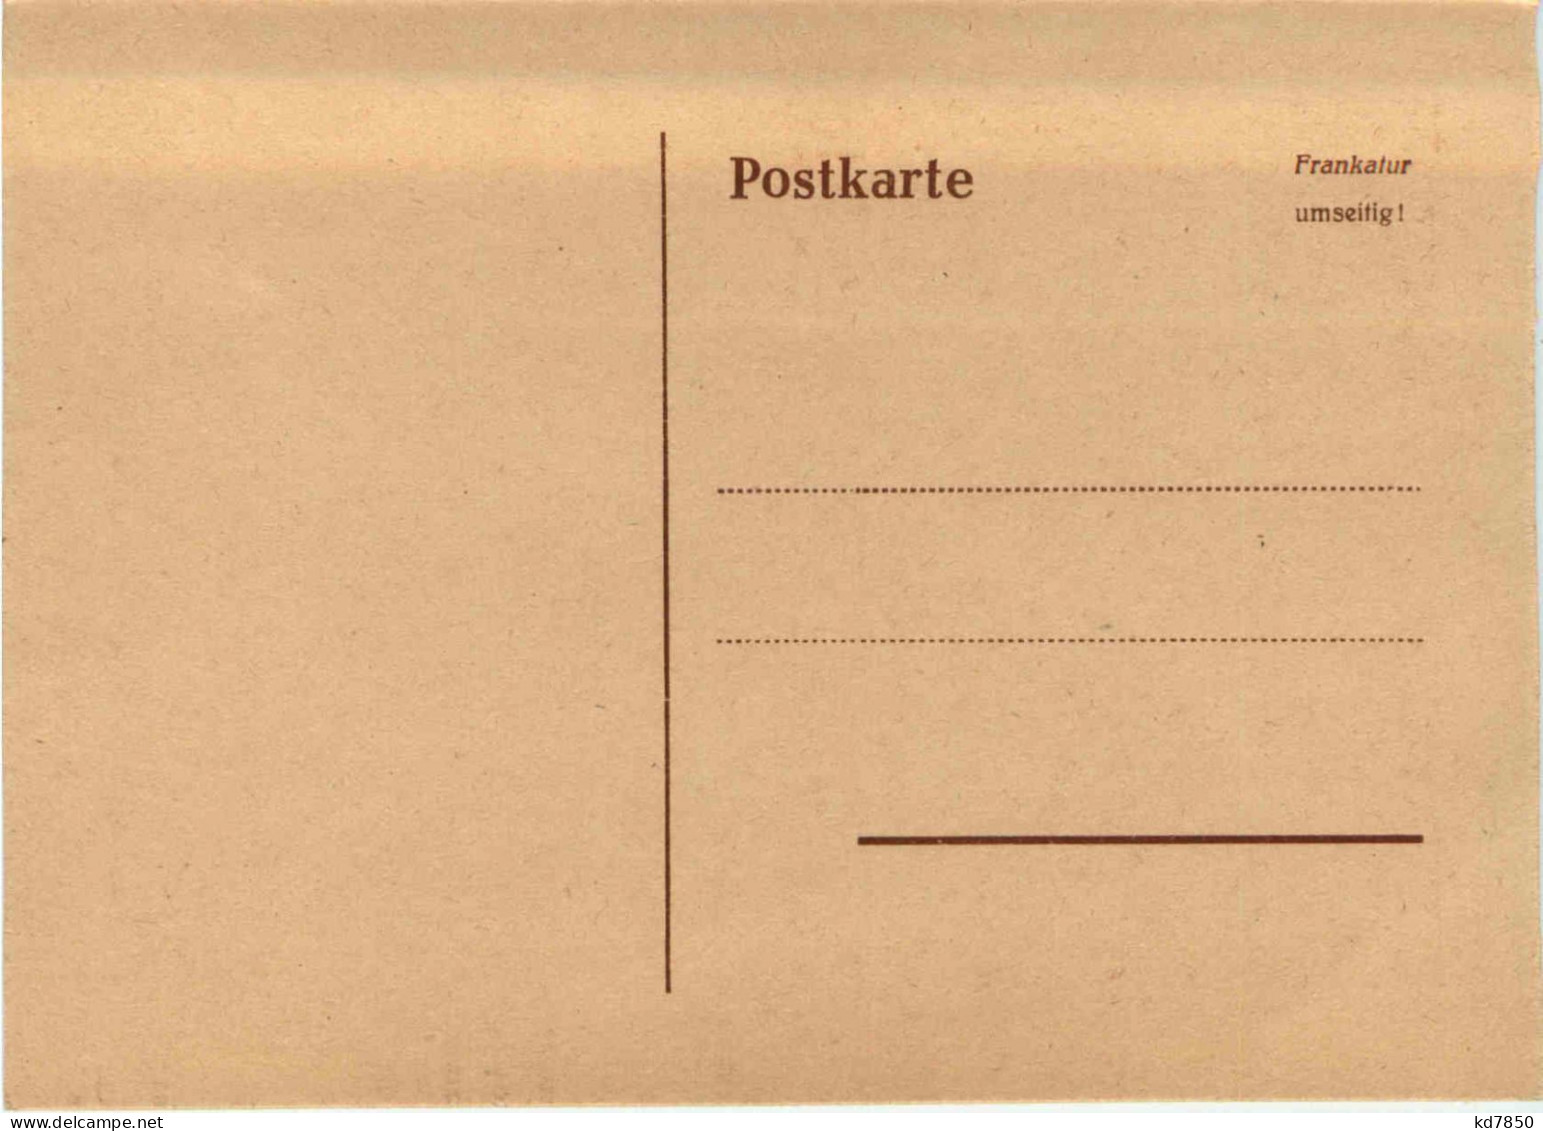 Tag Der Briefmarke 1951 - Saar - Timbres (représentations)